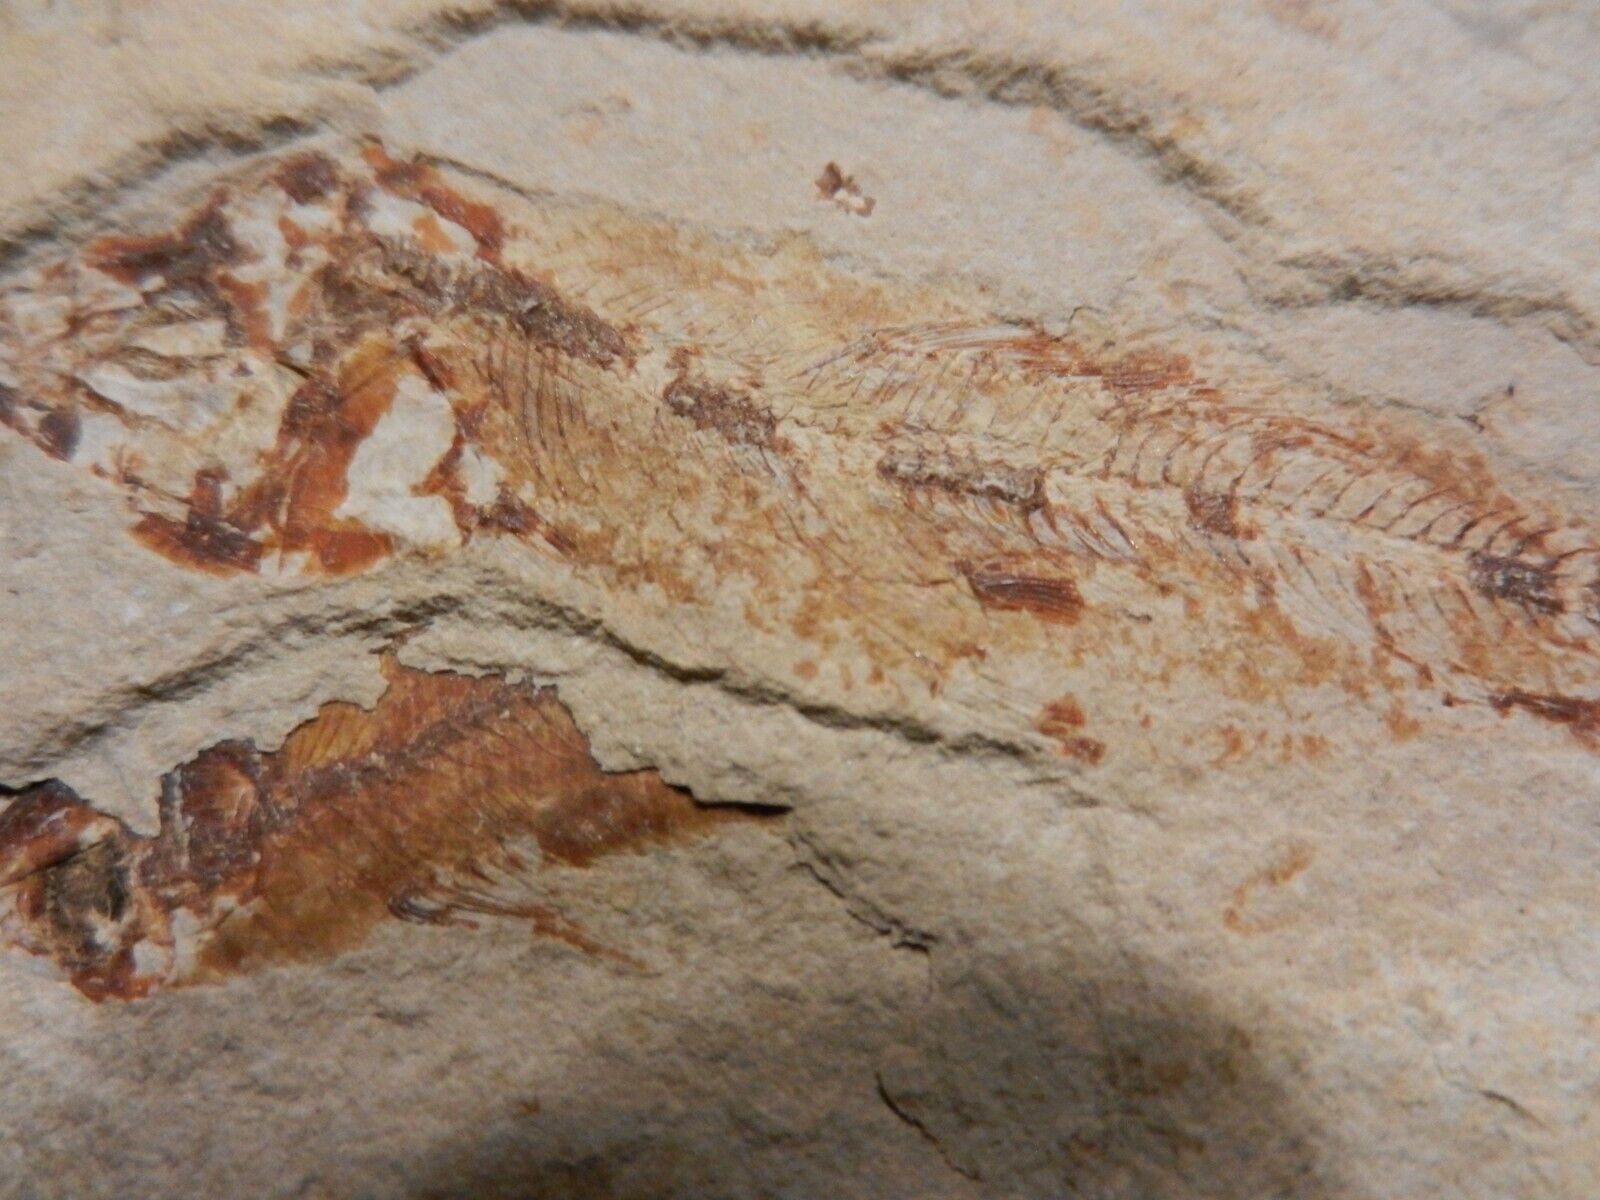 RARE Fossil Fish 1869 Pesci Eocene Era, from Libano on a Rock Fresh to Market